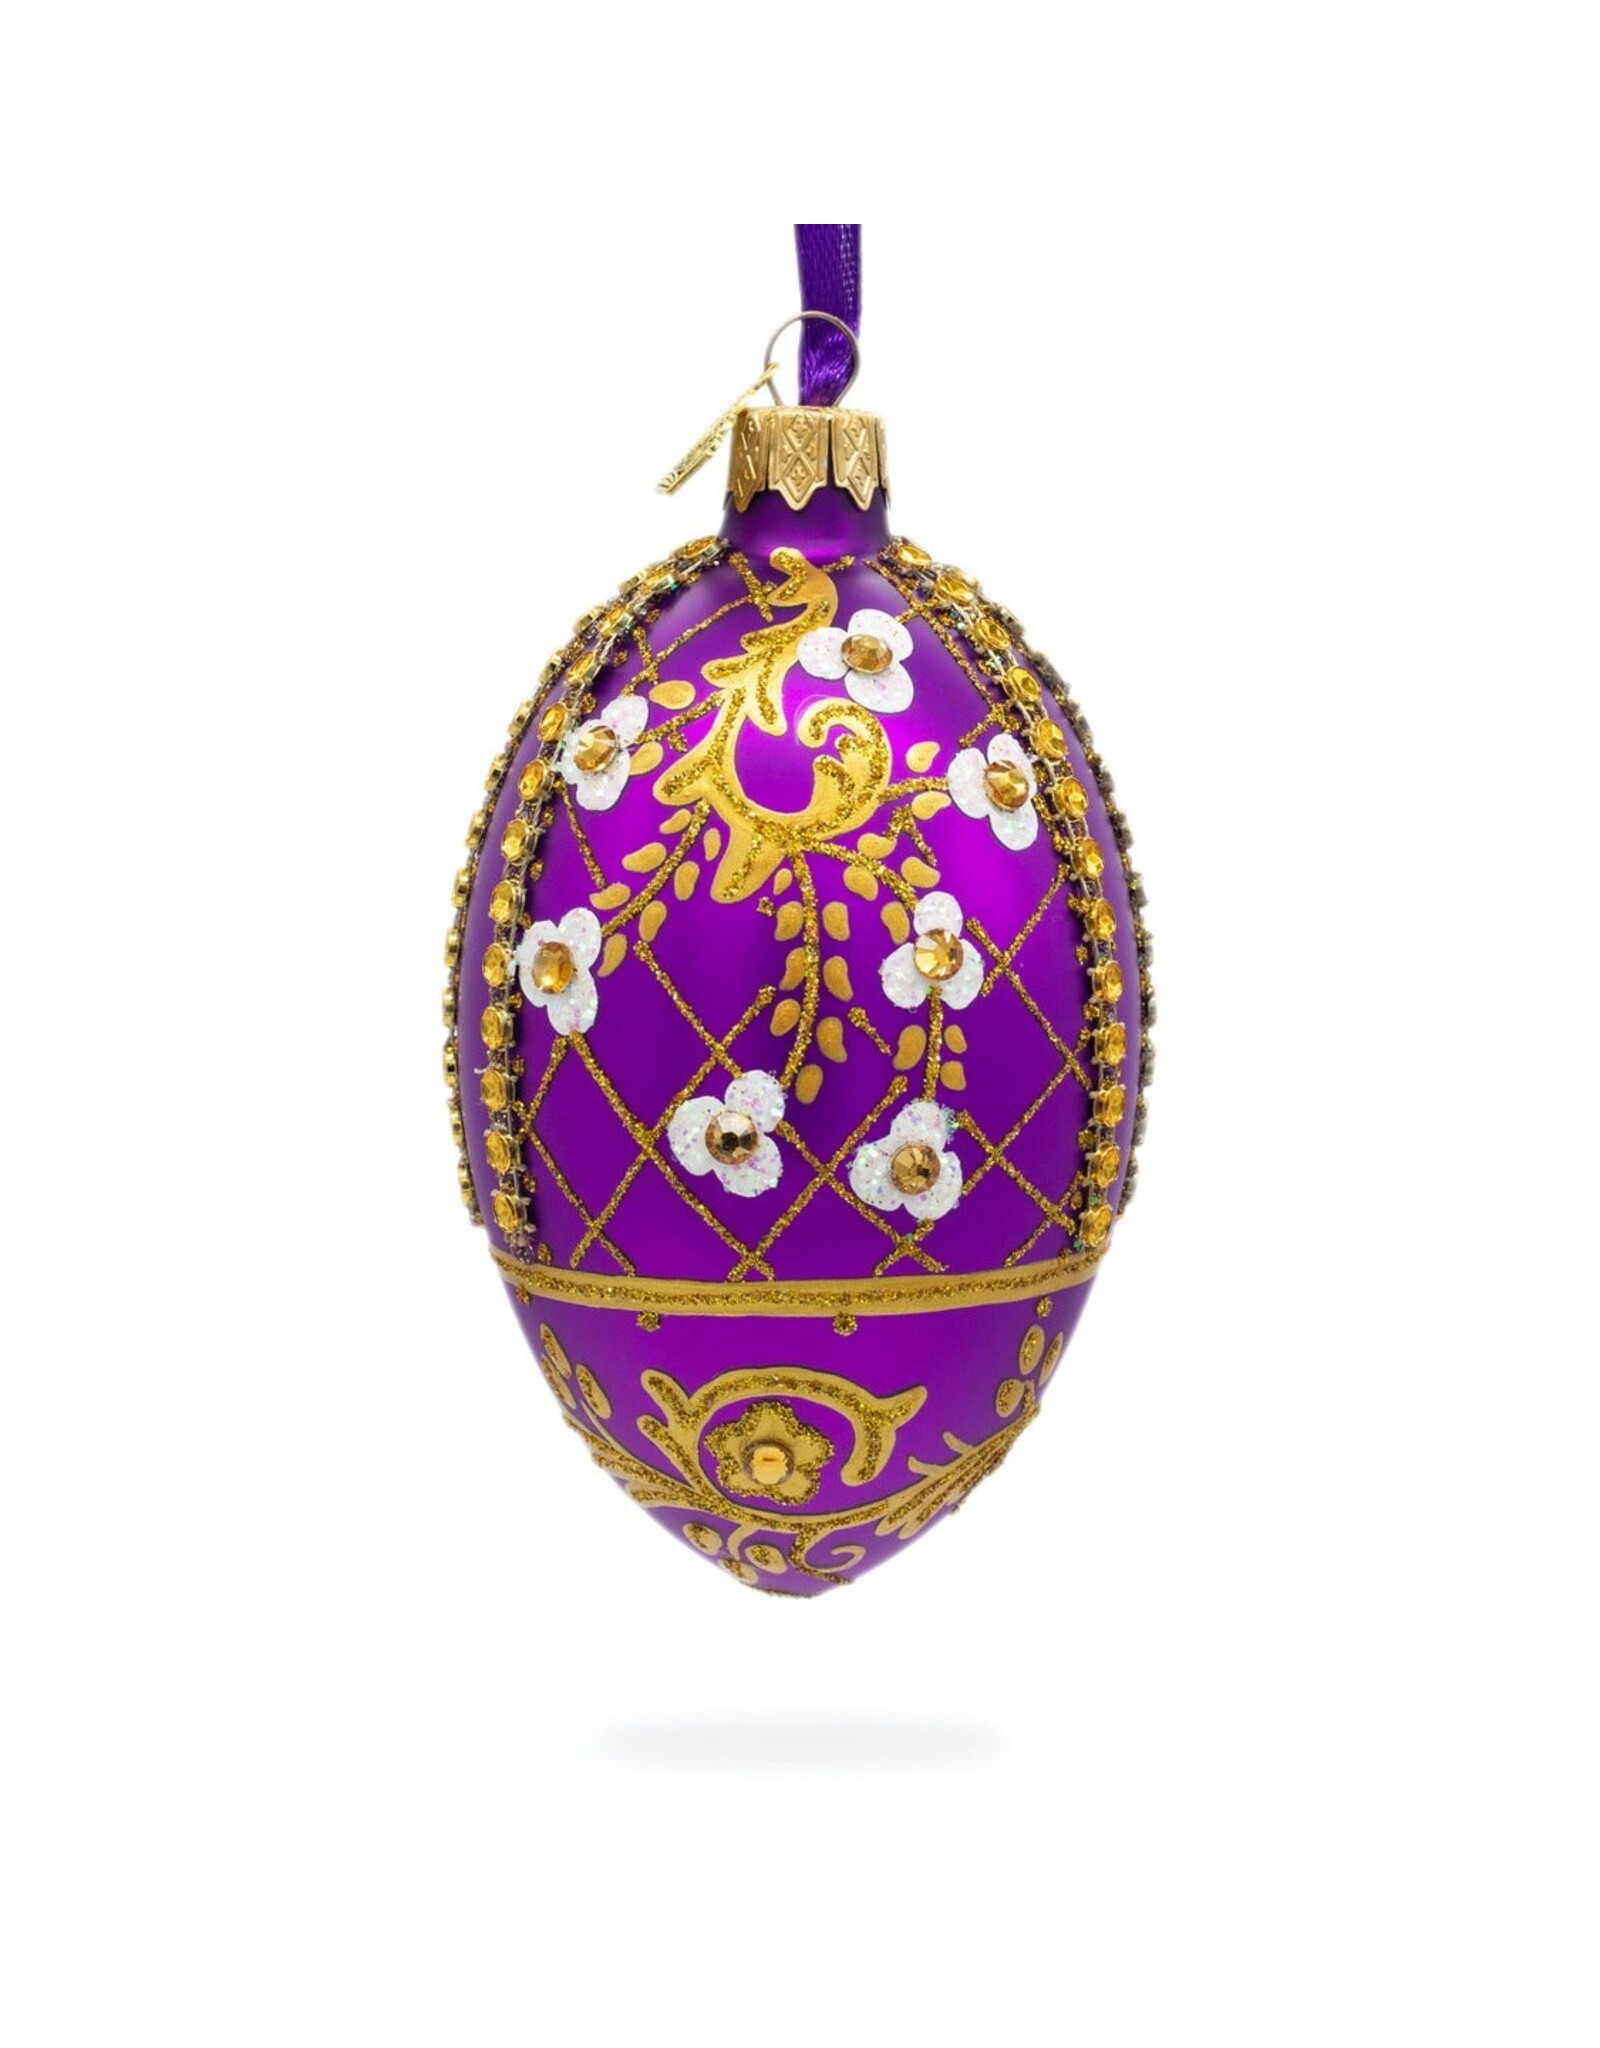 White Flowers on  Purple Lattice Glass Egg Ornament